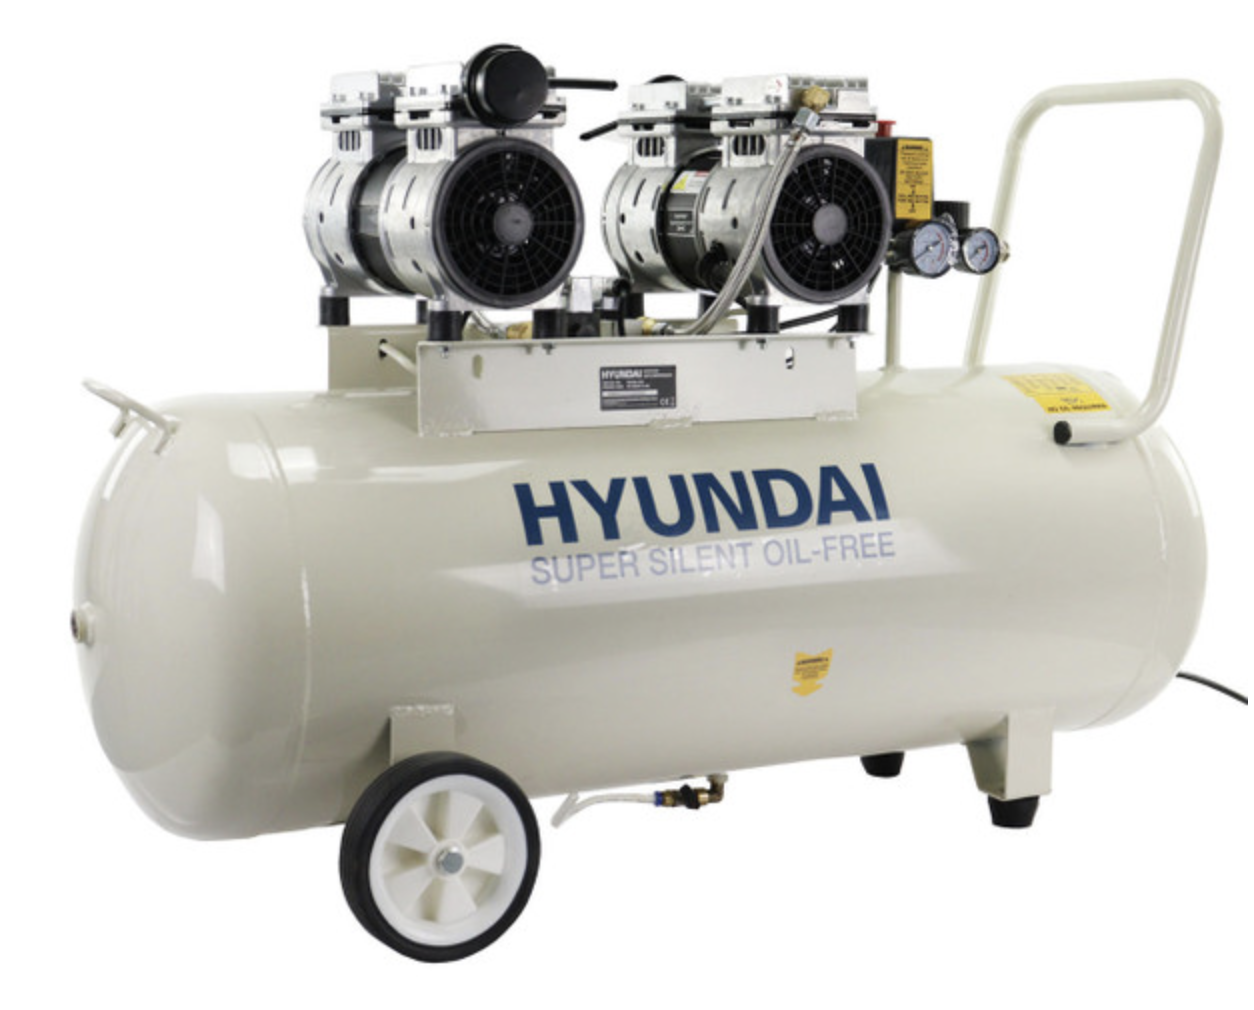 UK Suppliers Hyundai 100 Litre Silenced Air Compressor 1500W Electric Oil-free 2hp 